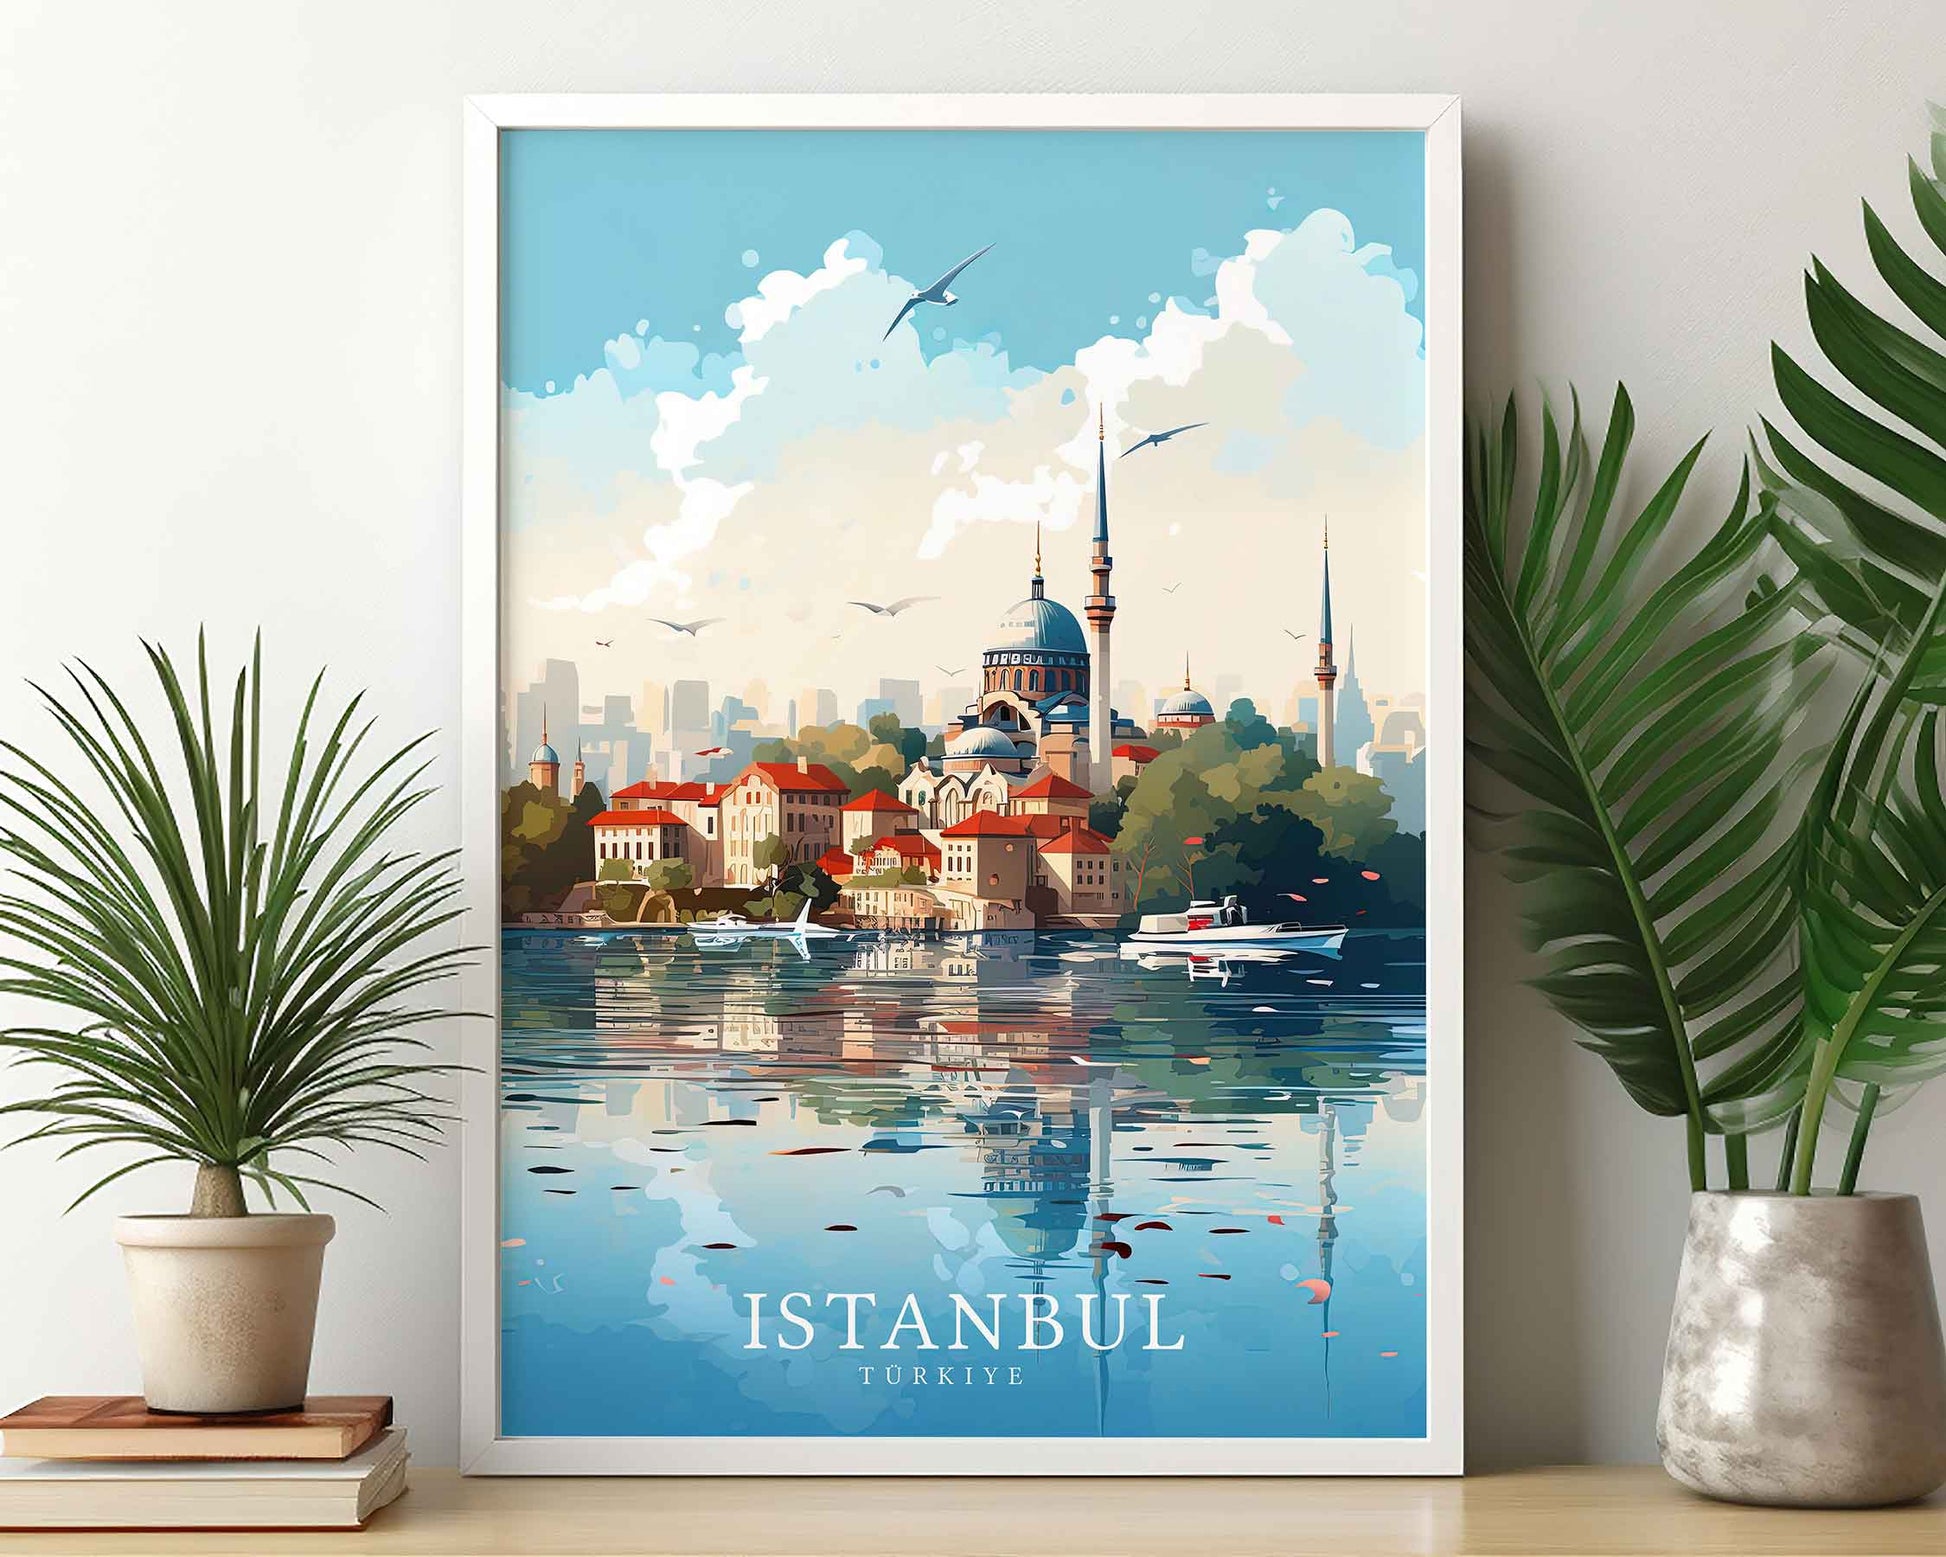 Framed Image of Istanbul Turkey Illustration Travel Poster Prints Wall Art